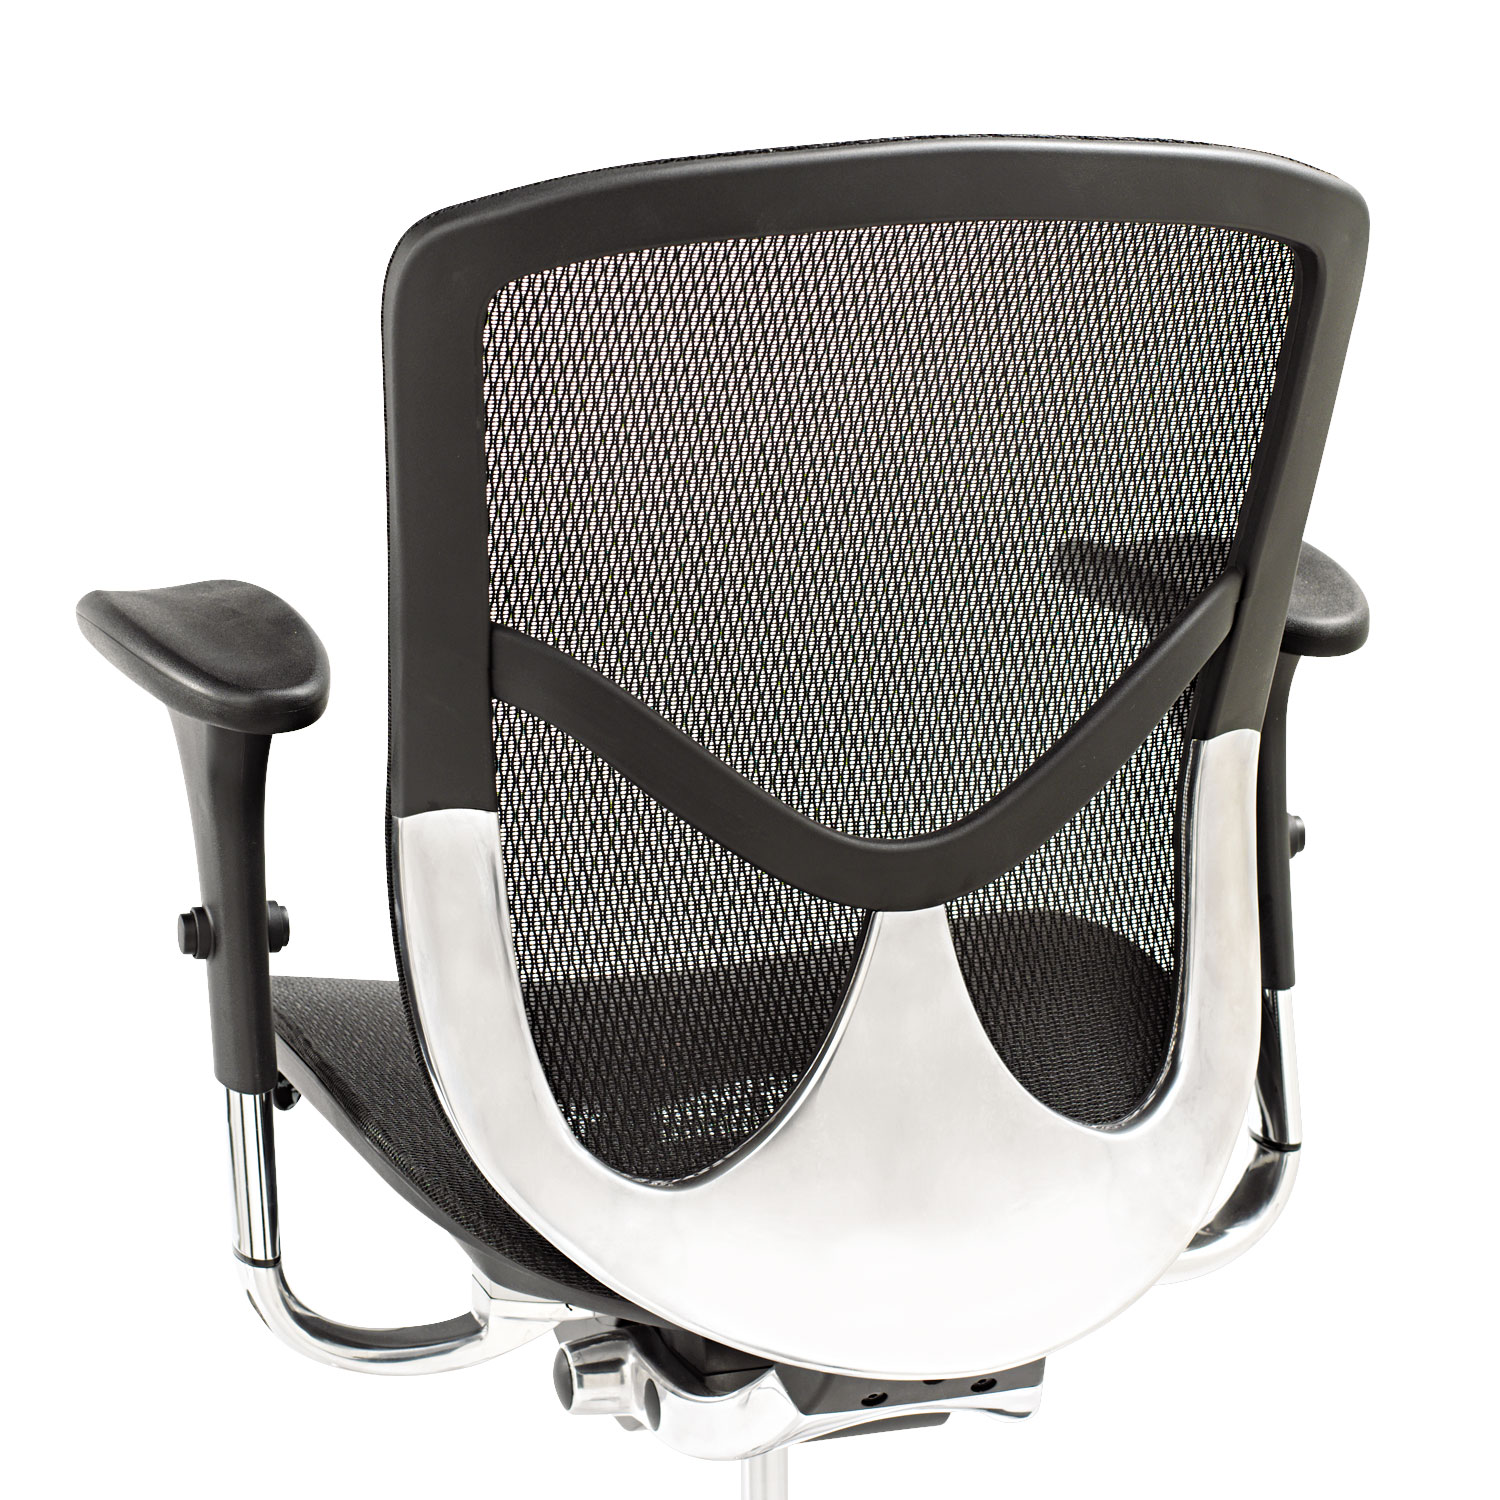 Alera EQ Series Ergonomic Multifunction Mid-Back Mesh Chair, Supports up to 250 lbs., Black Seat/Black Back, Aluminum Base